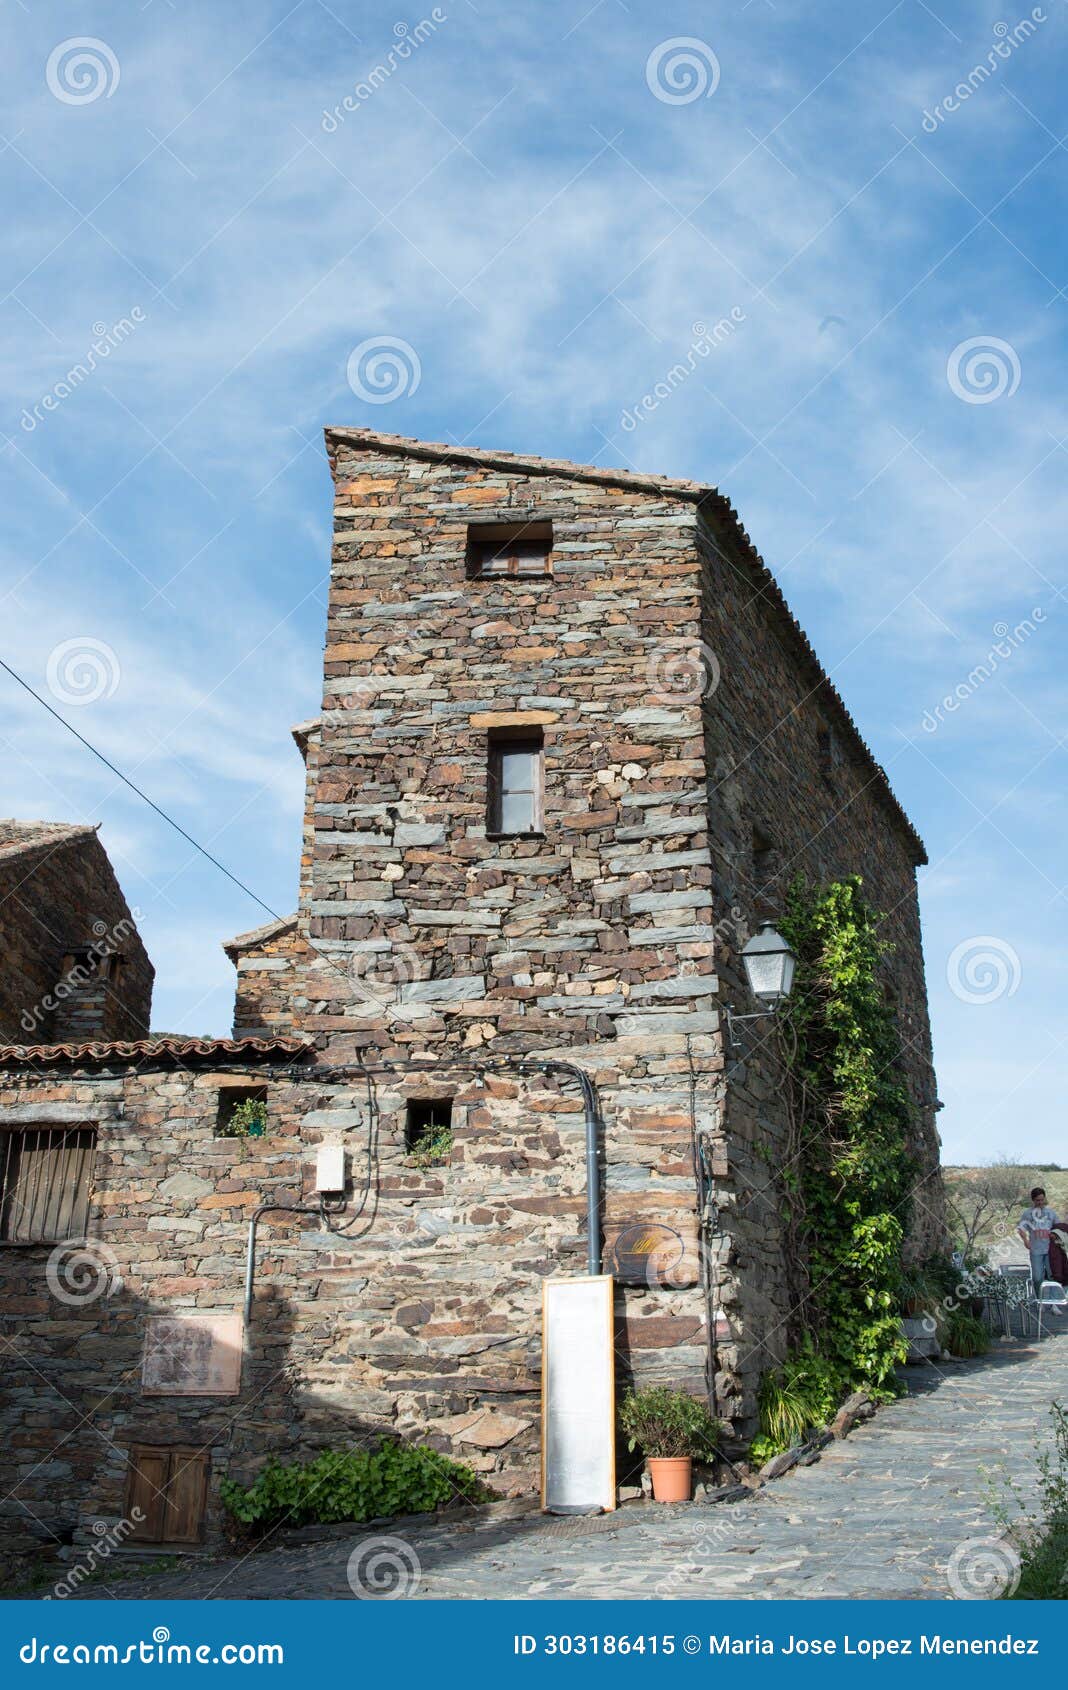 beautiful house in patones de arriba, madrid. traditional stone walls